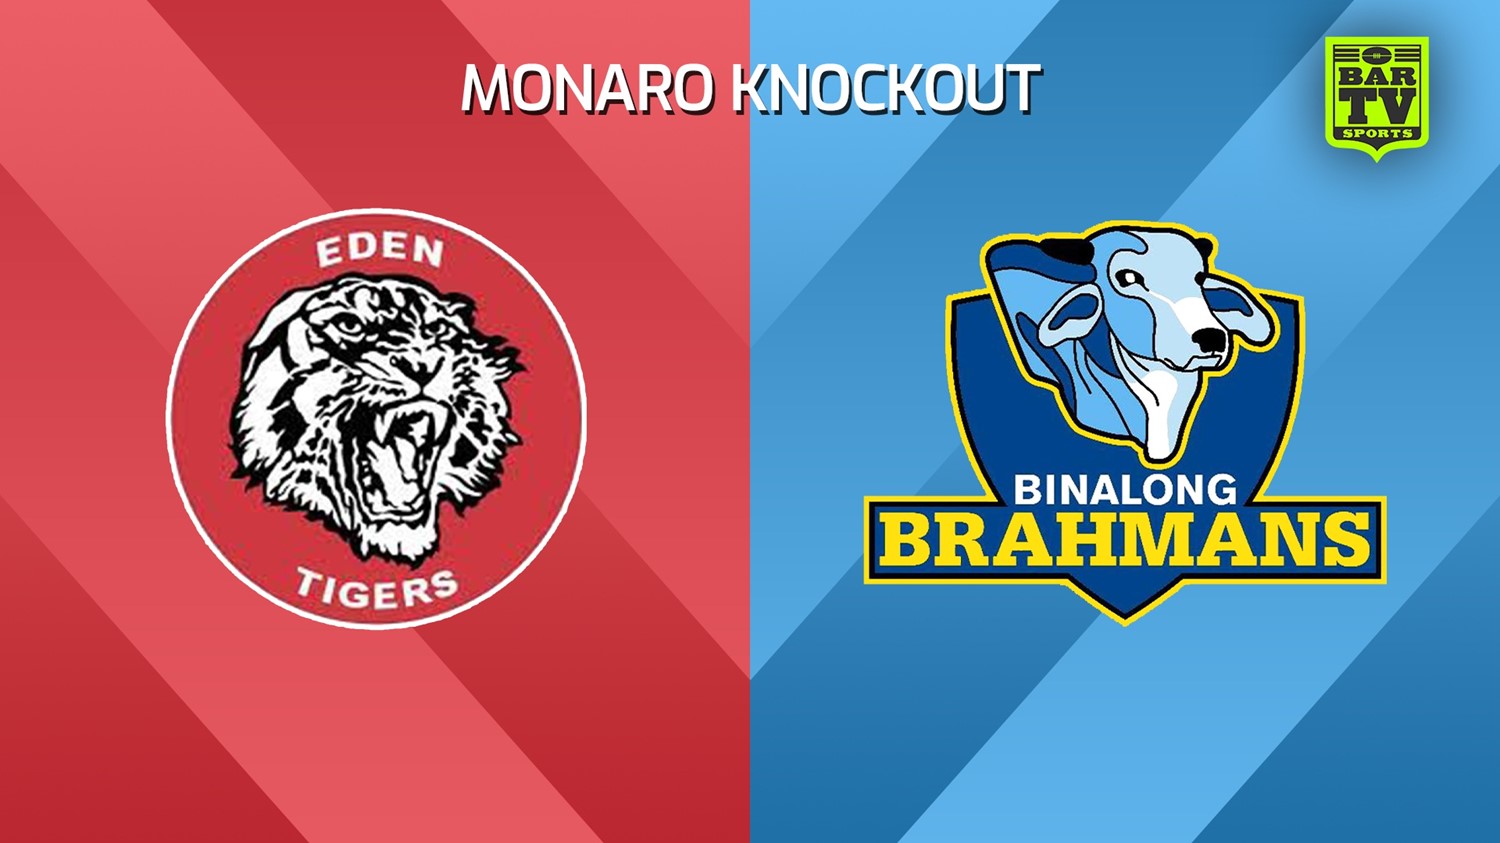 240316-Monaro Knockout Cup Grand Final - Ladies League Tag - Eden Tigers v Binalong Brahmans Slate Image